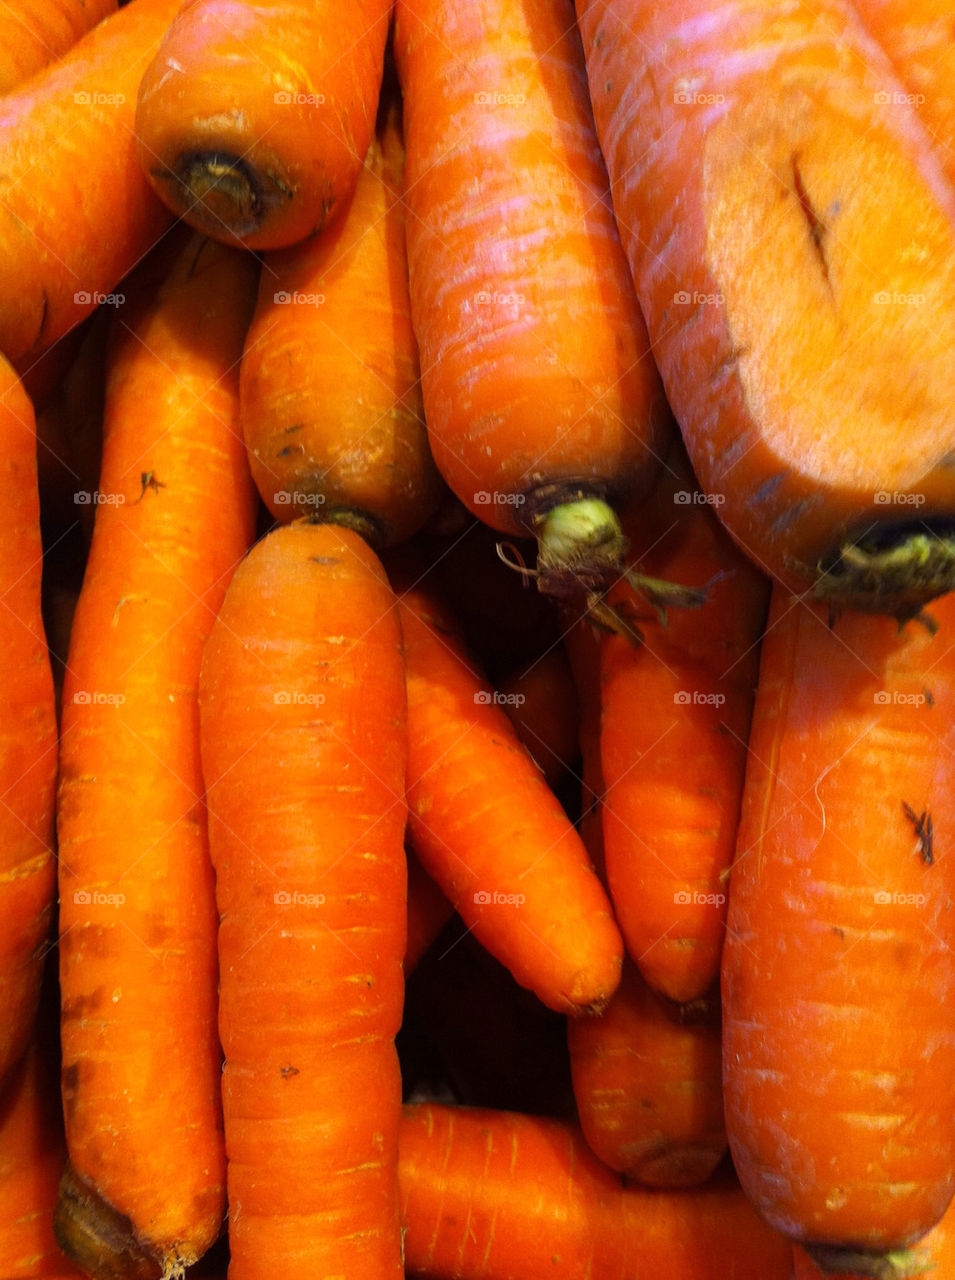 orange carrots by tplips01